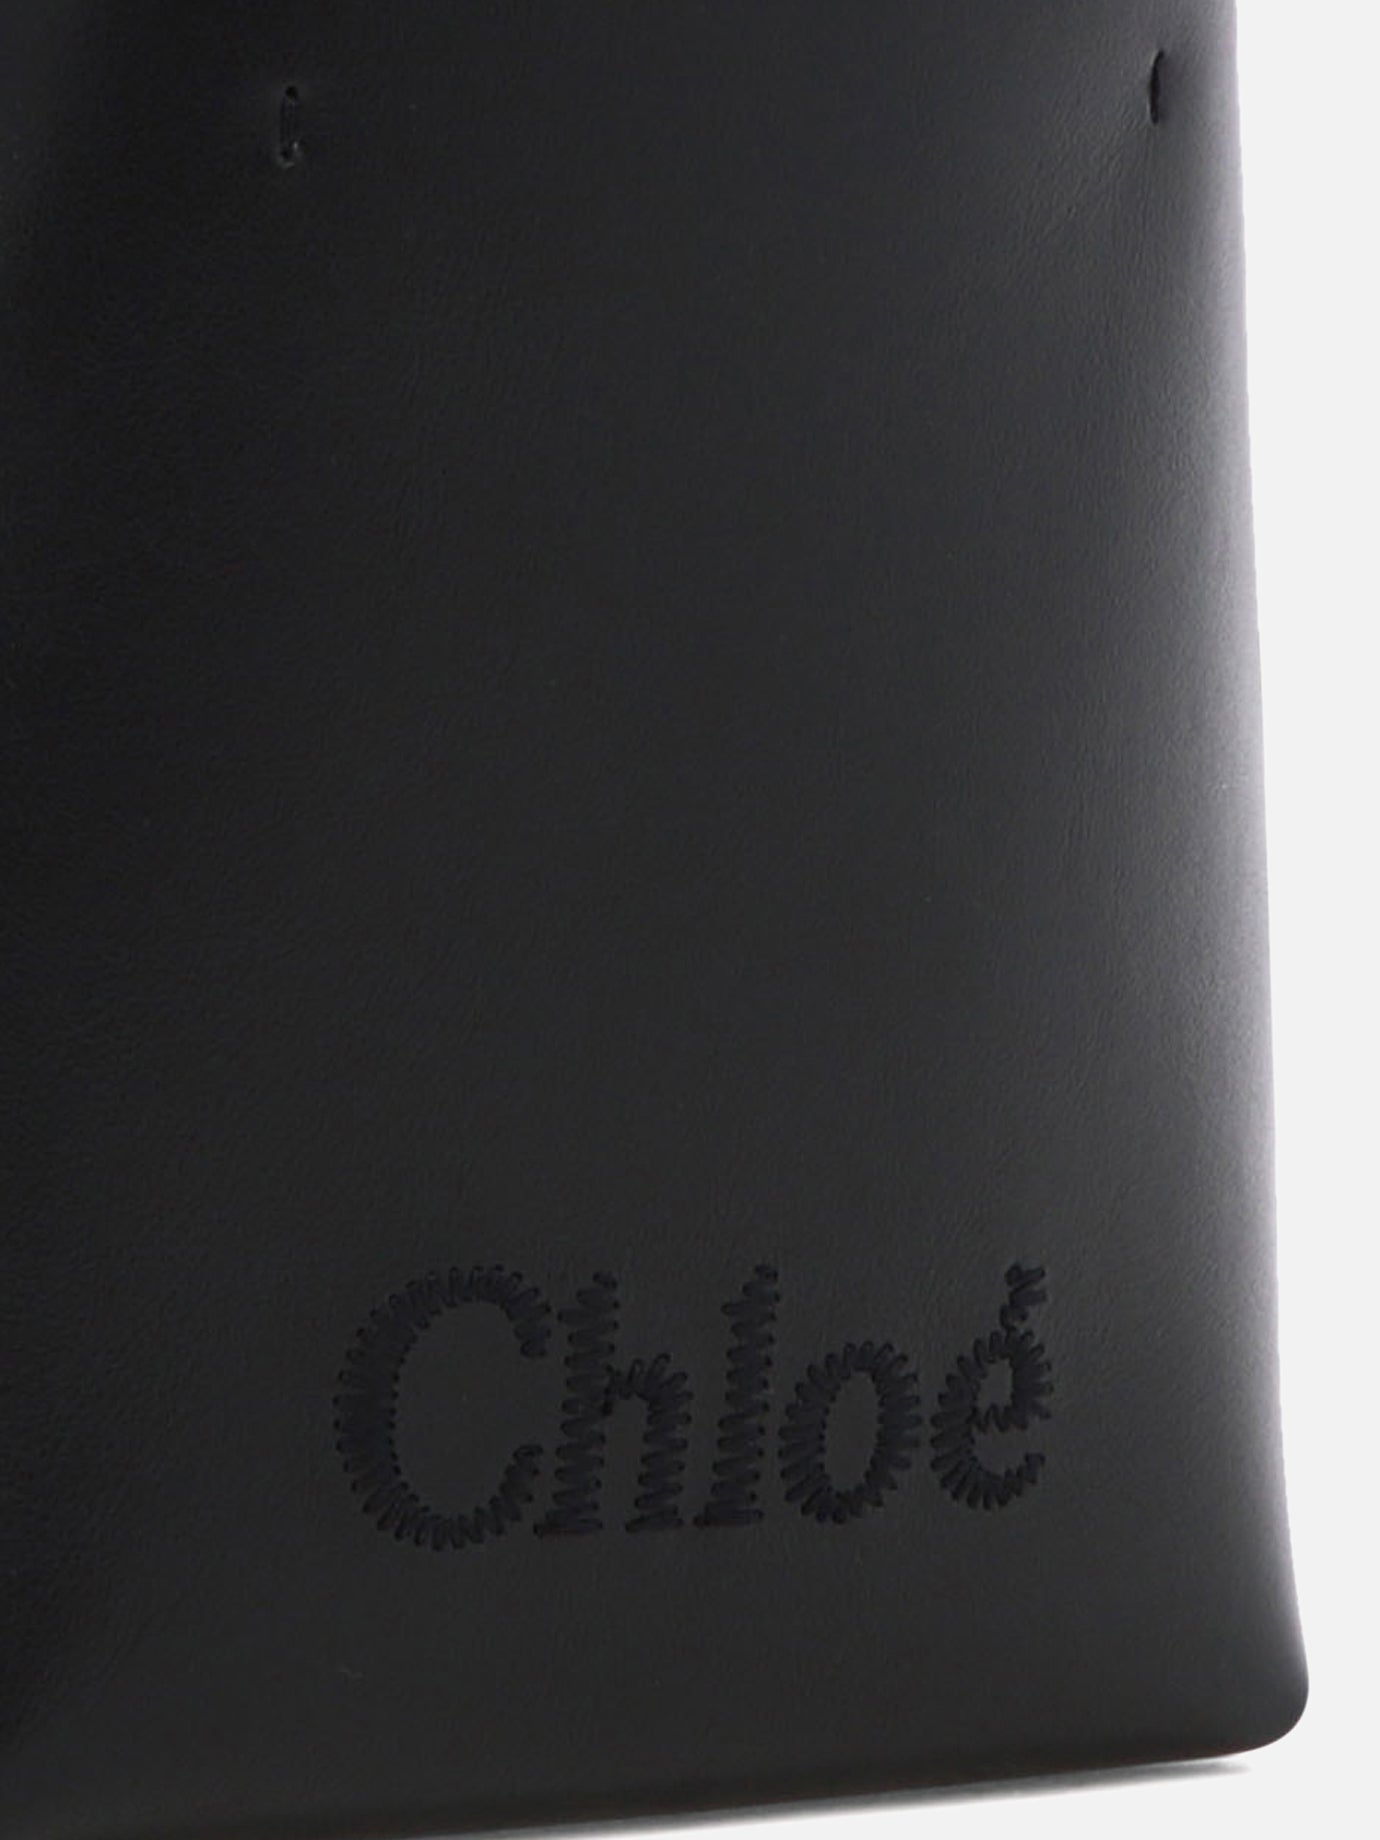 "Chloé Sense Micro" handbag